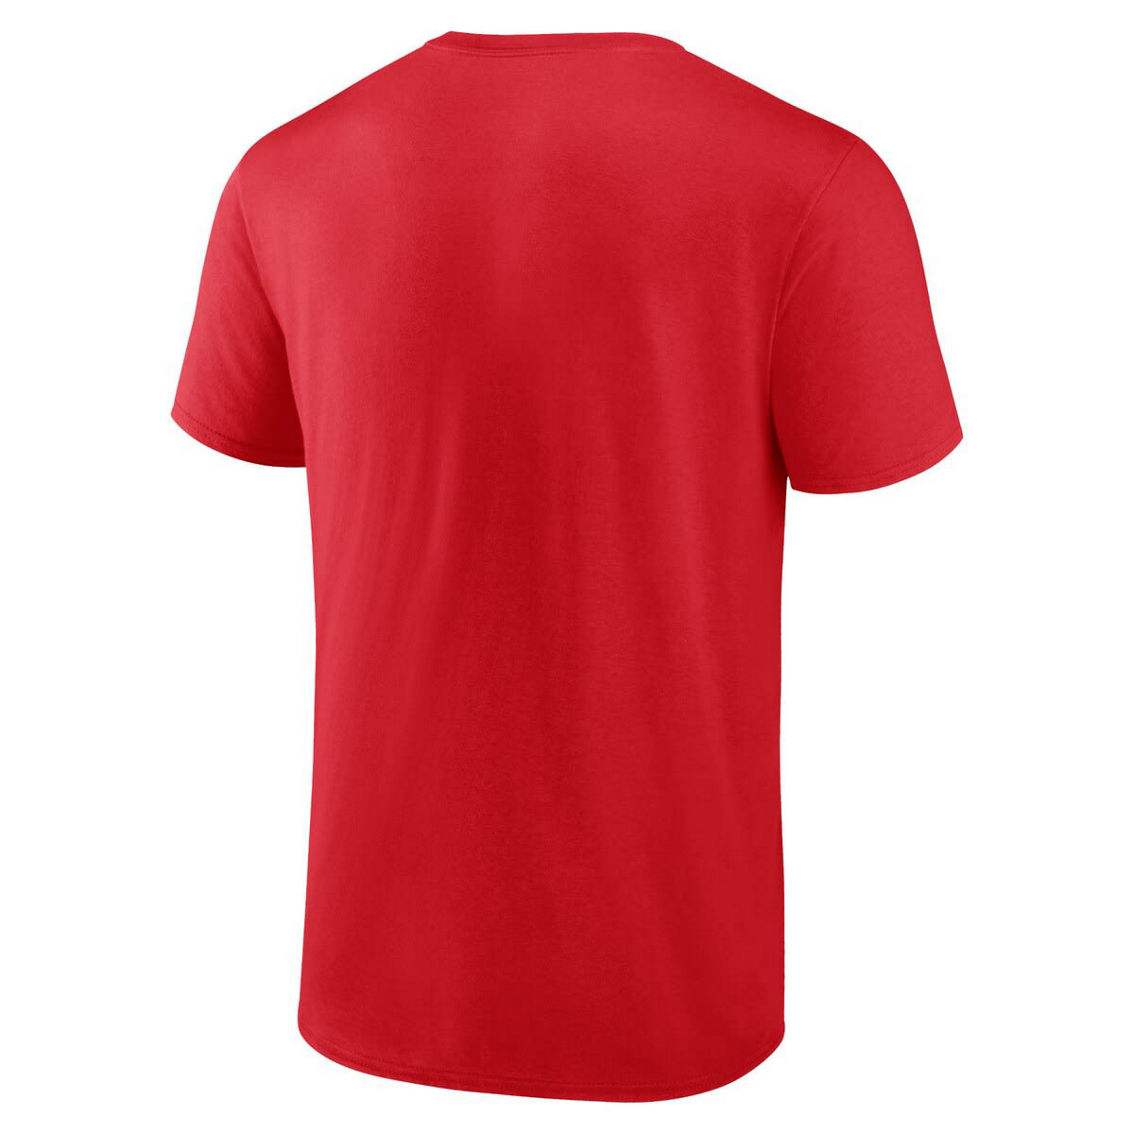 Fanatics Men's Fanatics Red Florida Panthers Represent T-Shirt - Image 4 of 4